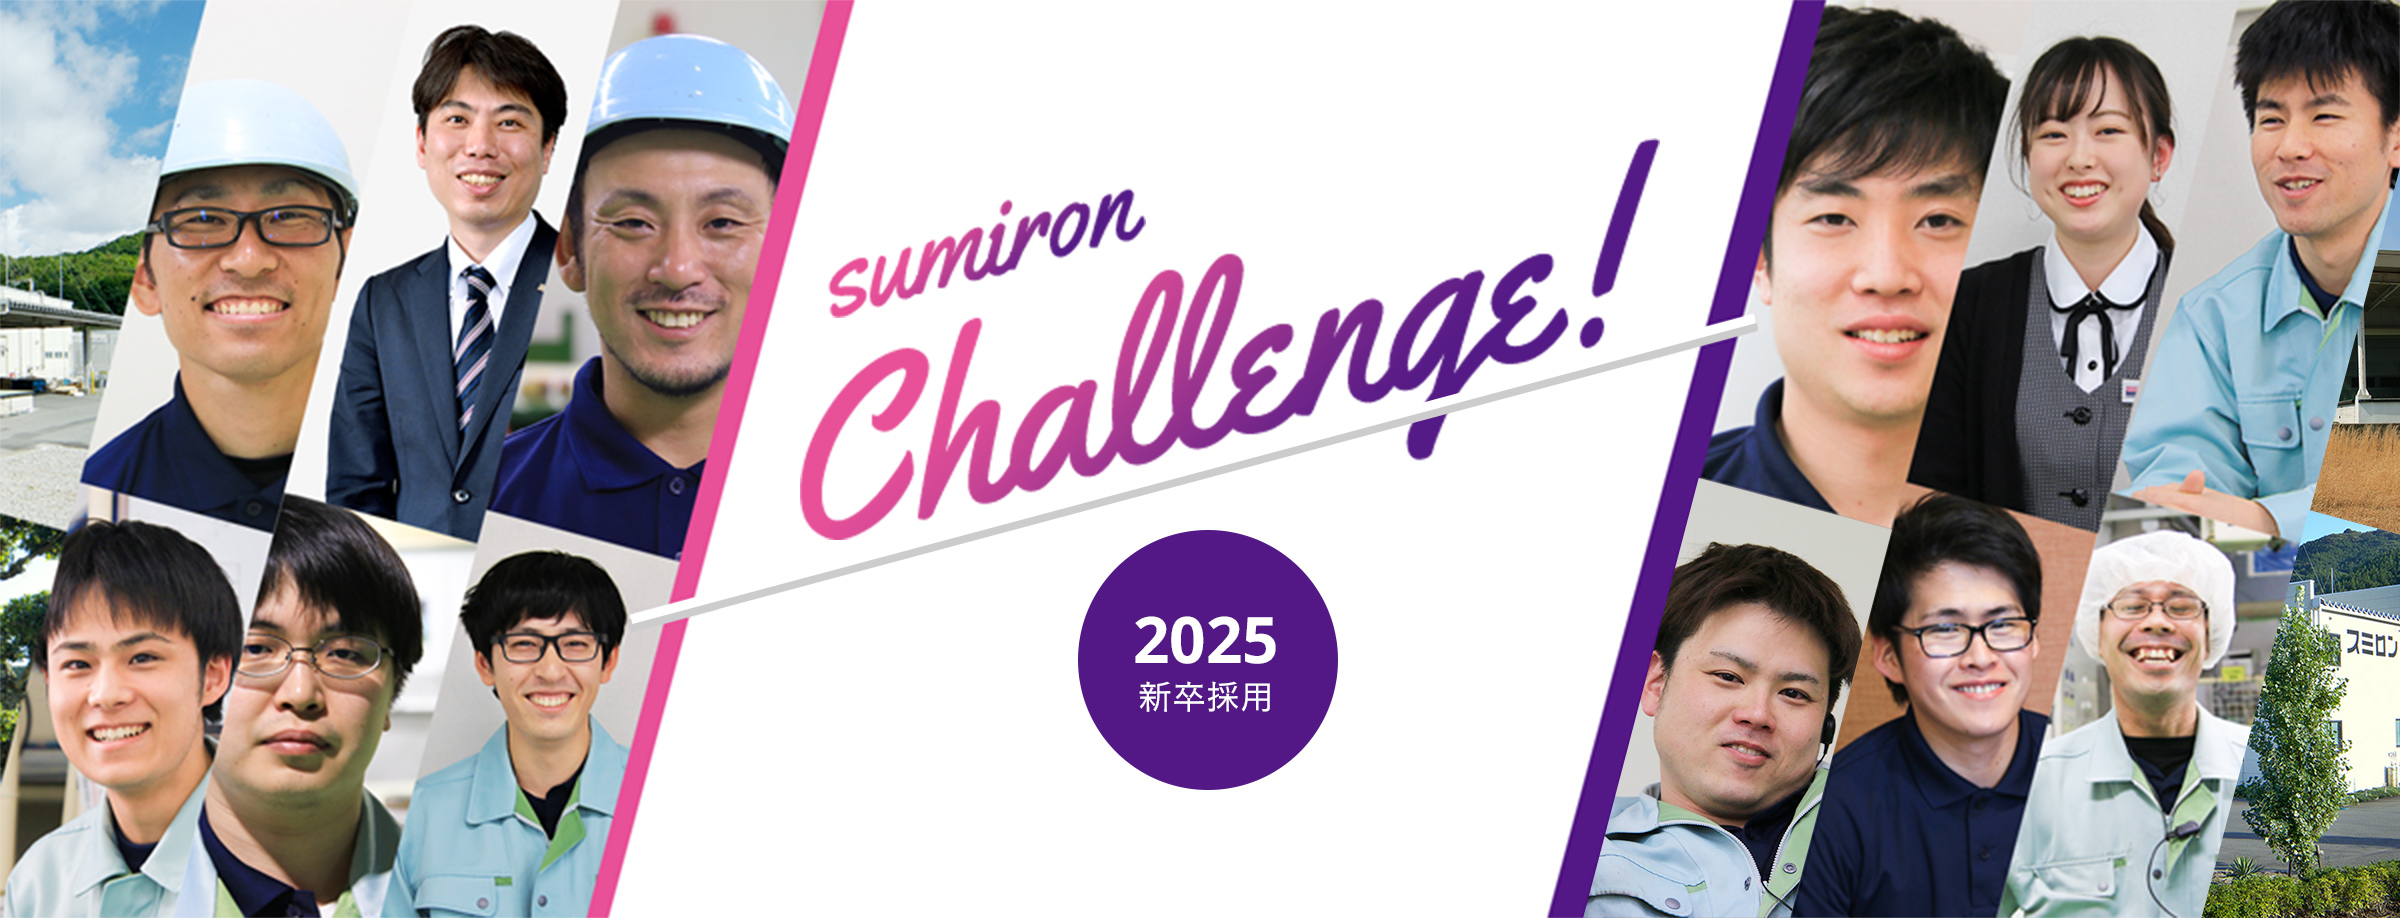 sumiron Challenge! 2019 採用情報